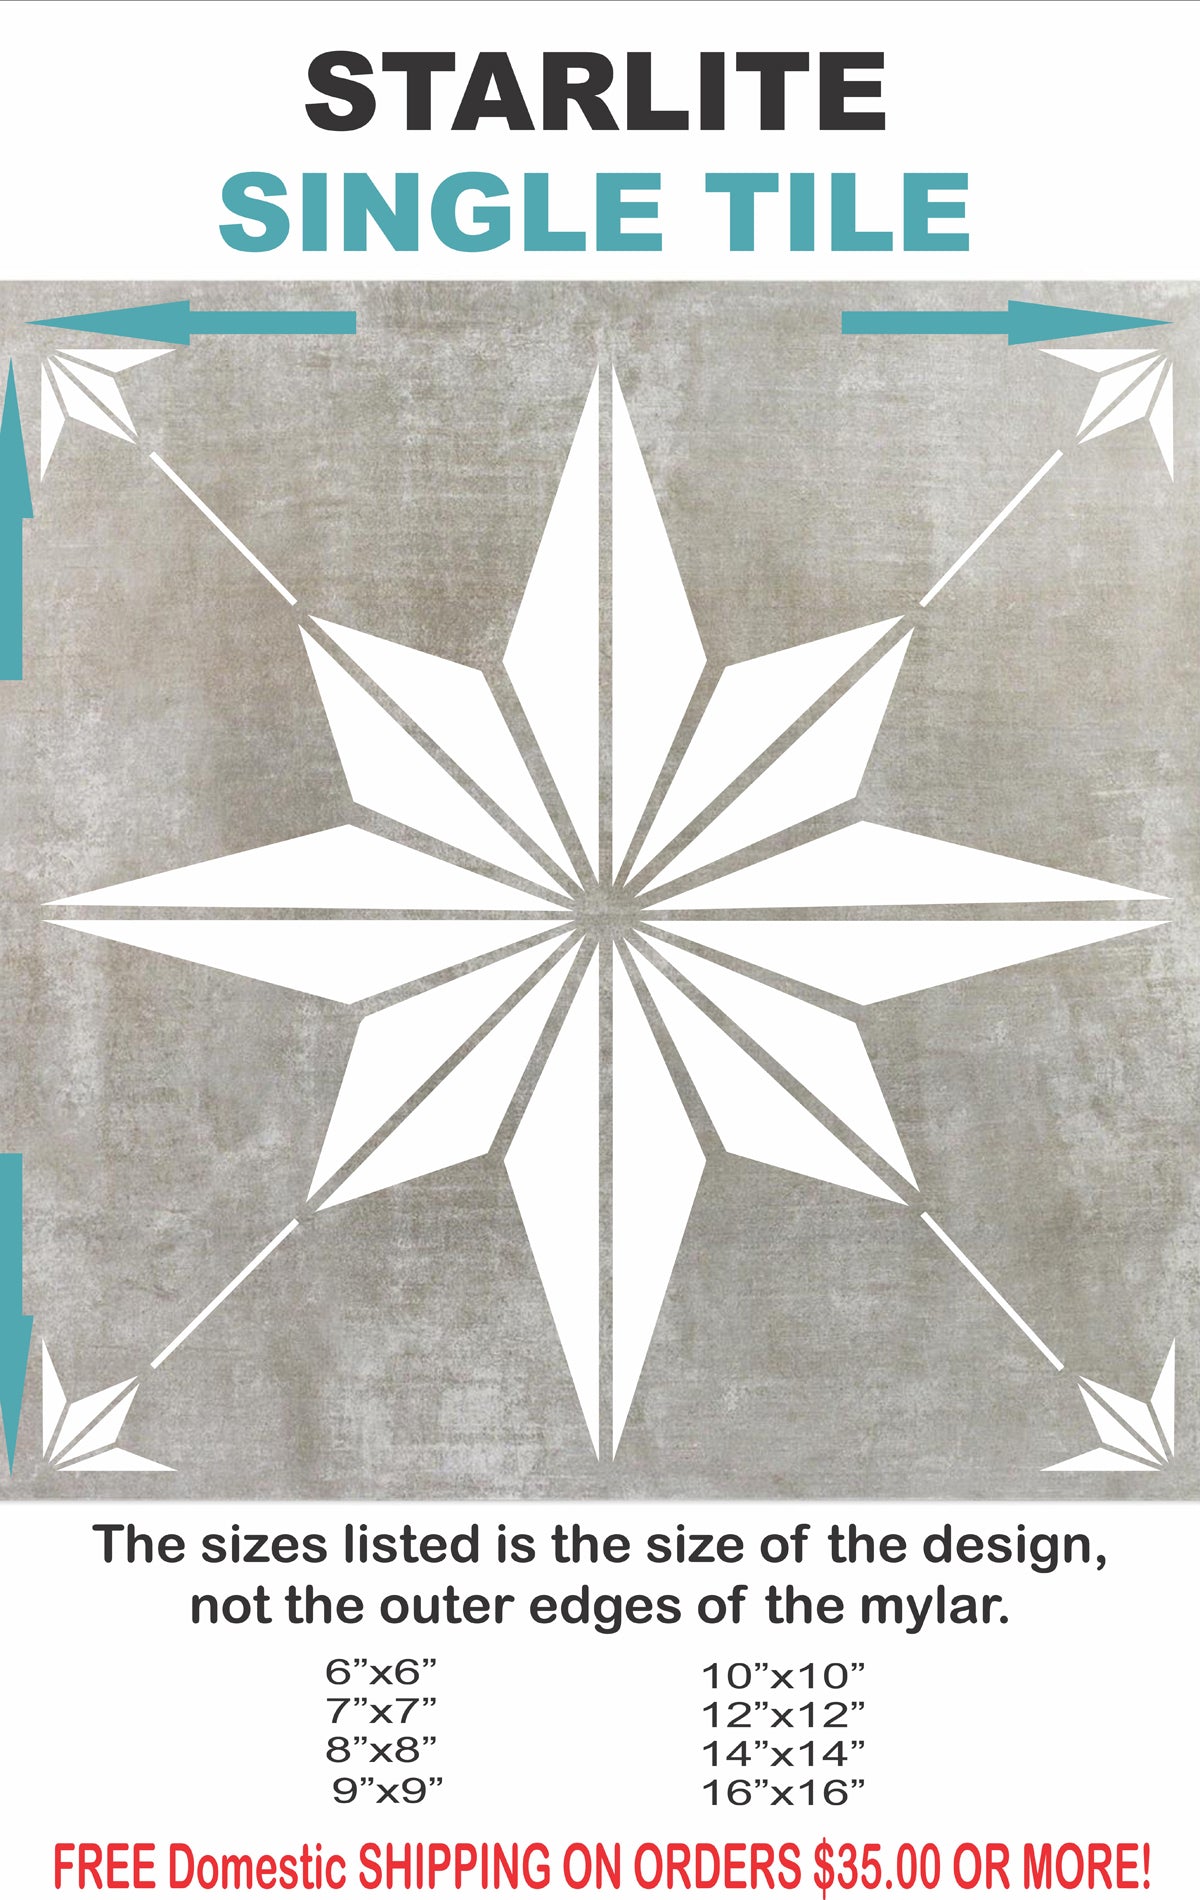 STARLITE Tile Stencil - Tile Stencils - Floor Stencils - Stair Riser Stencil - Backsplash Tile 3